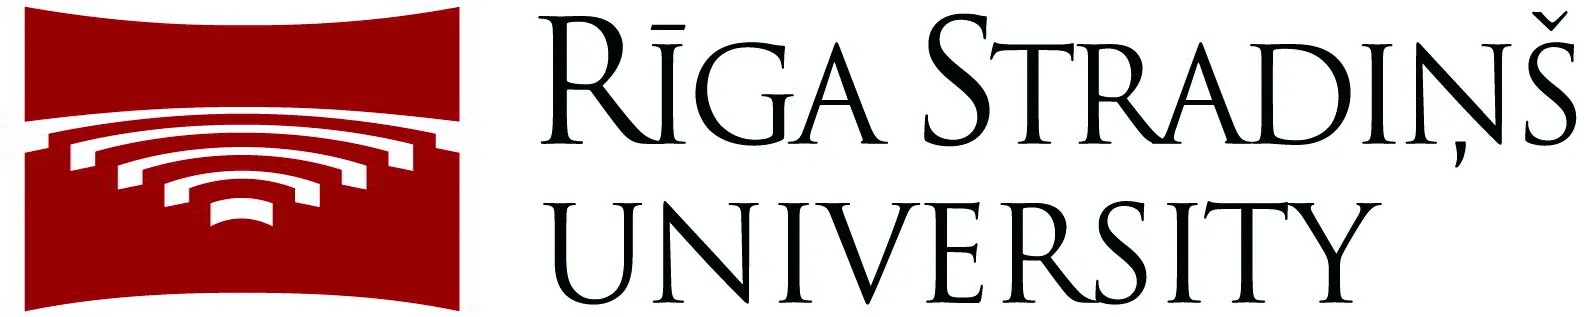 Rīga Straniņš University logo